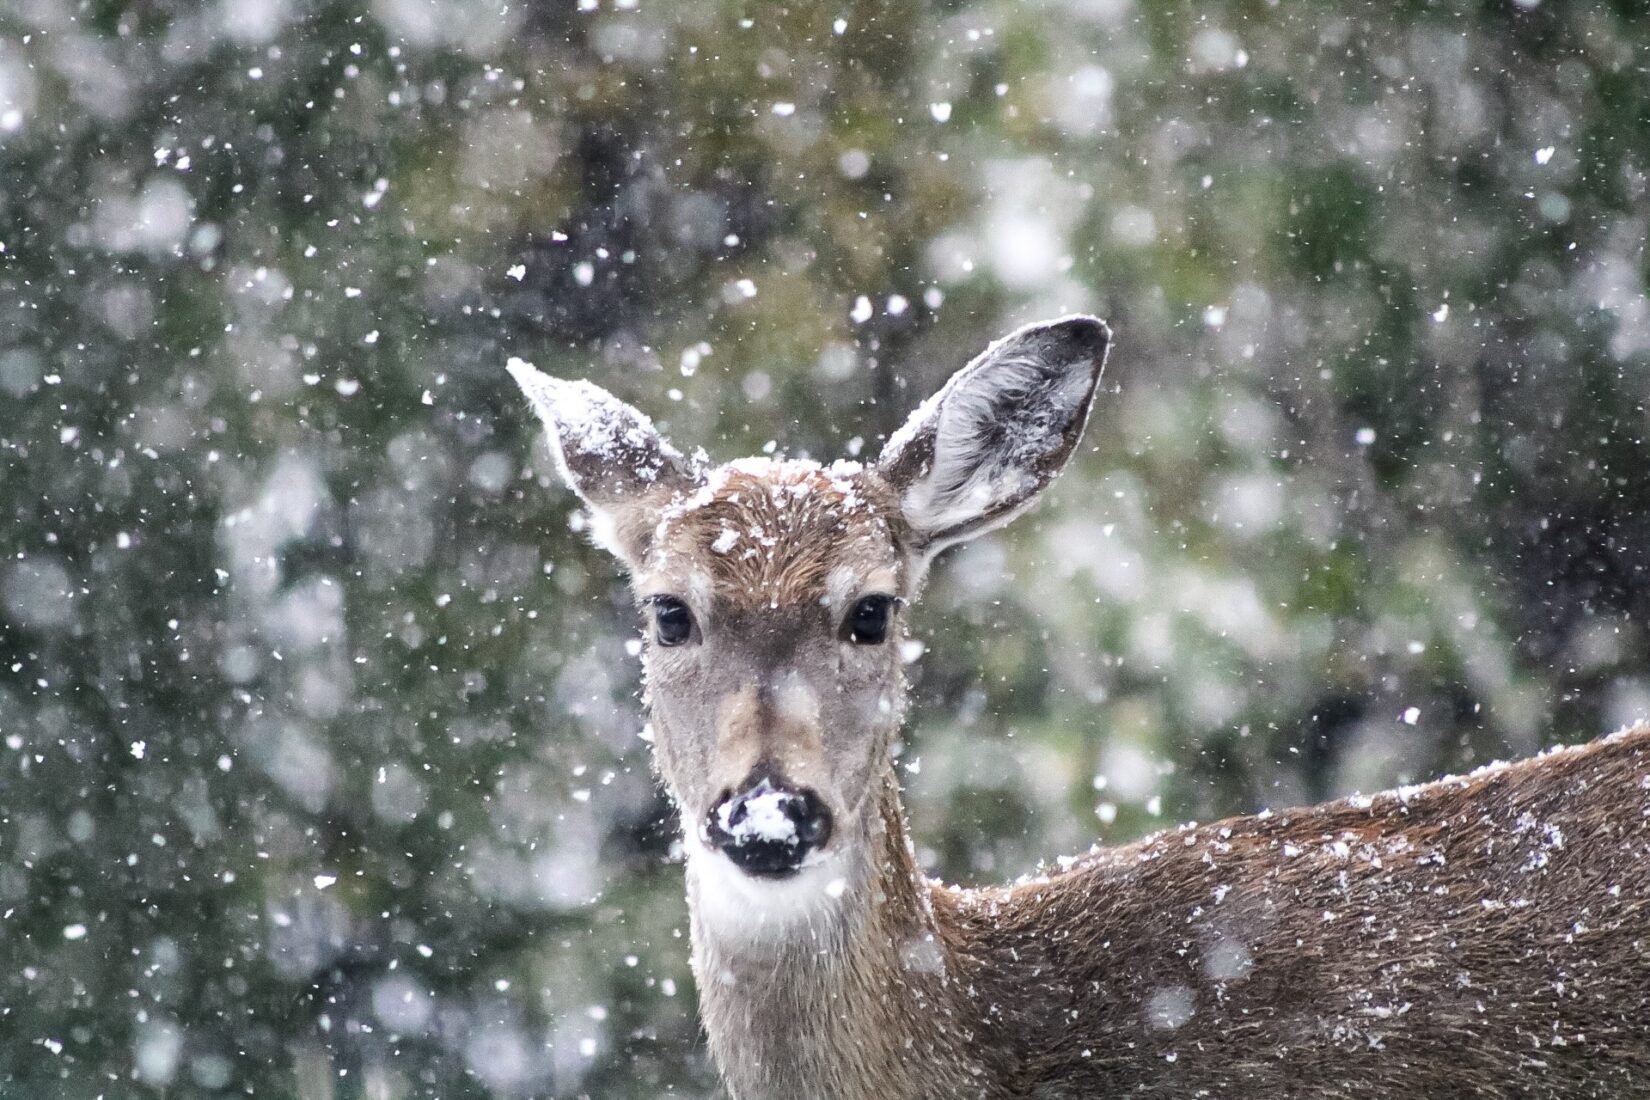 Deer covered in falling snow